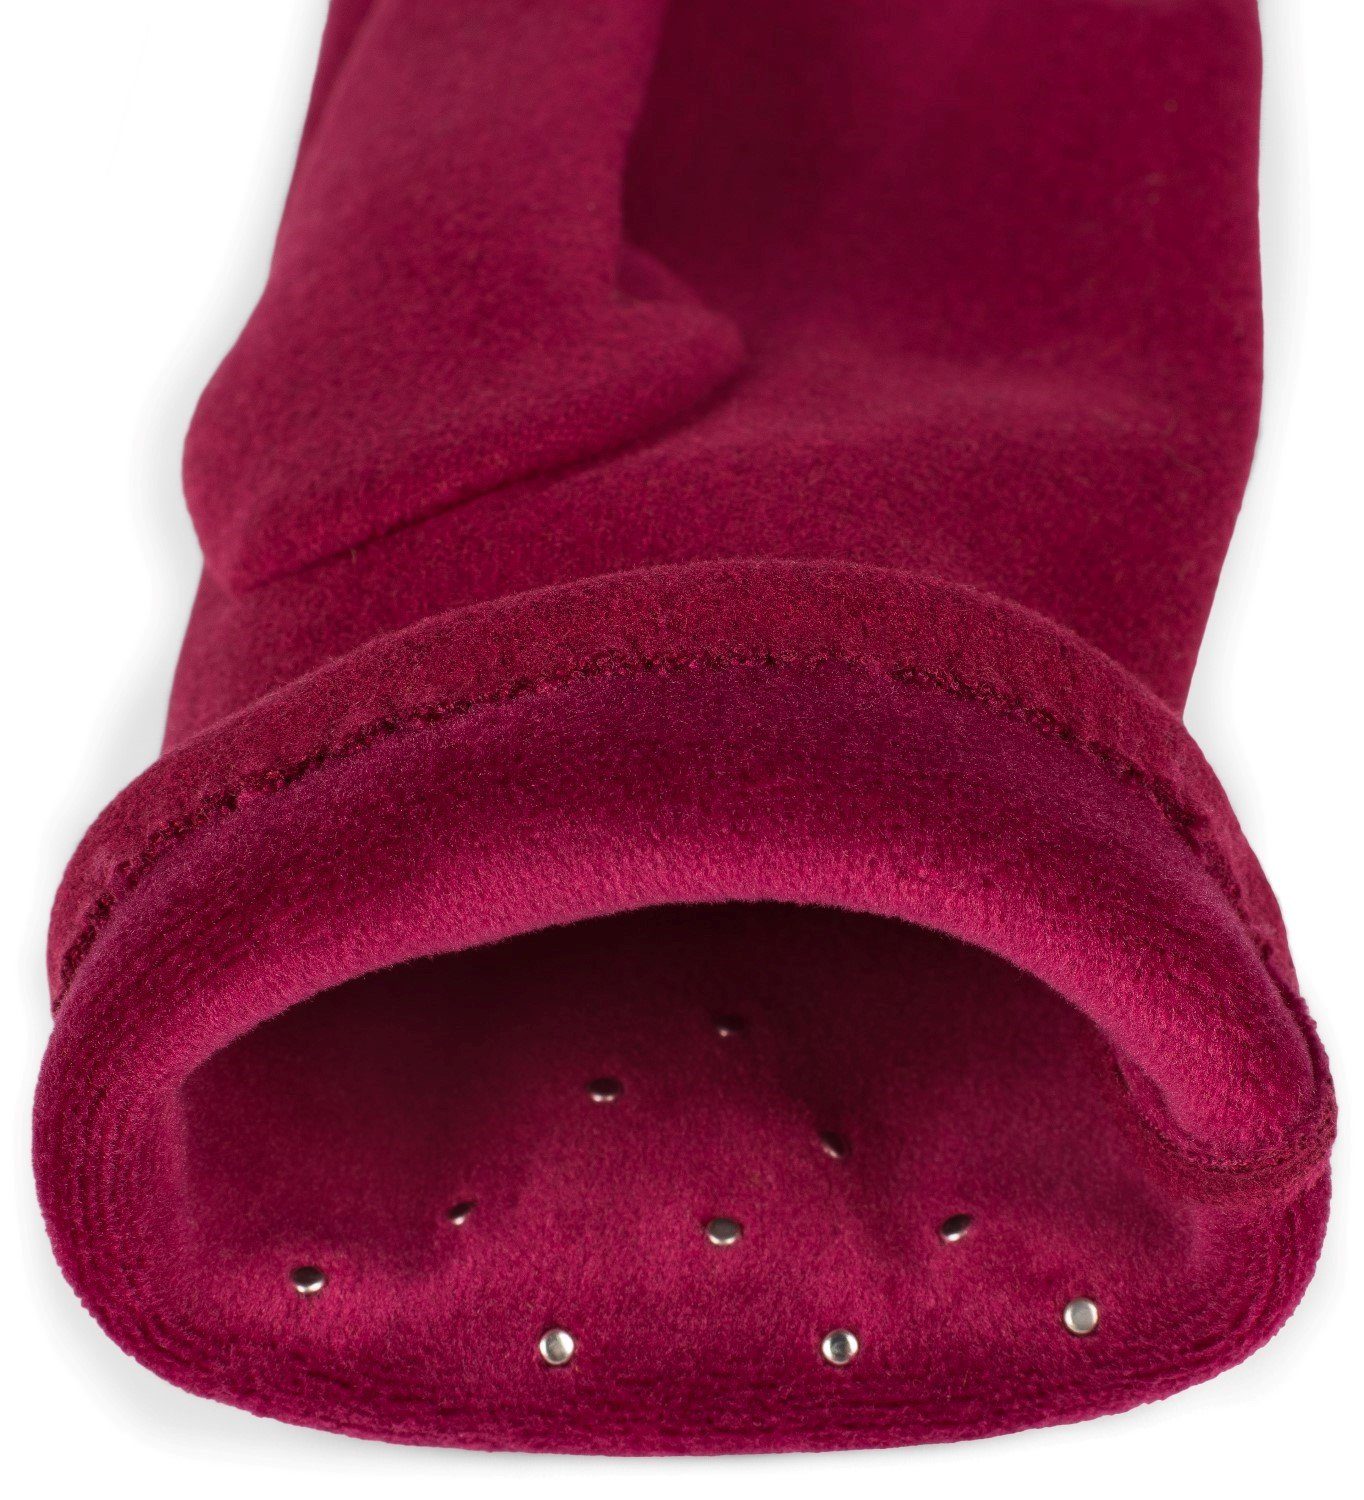 styleBREAKER Fleecehandschuhe Touchscreen Handschuhe und Strass Perlen mit Bordeaux-Rot